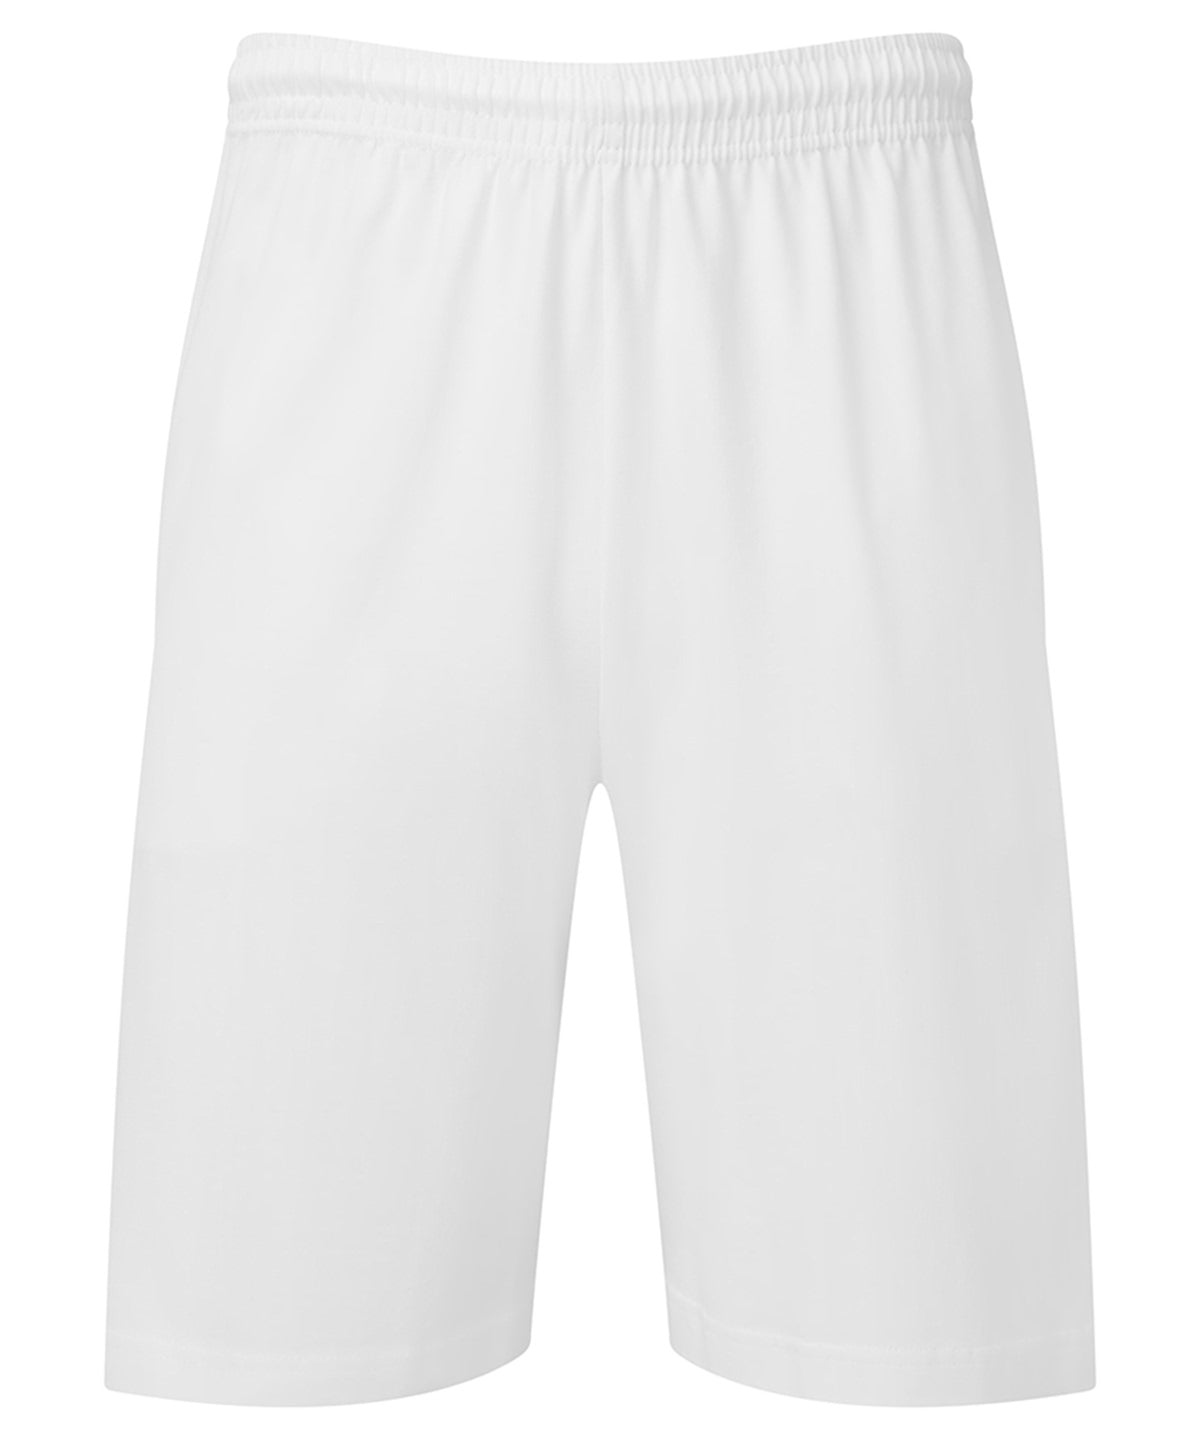 Iconic 195 Jersey shorts